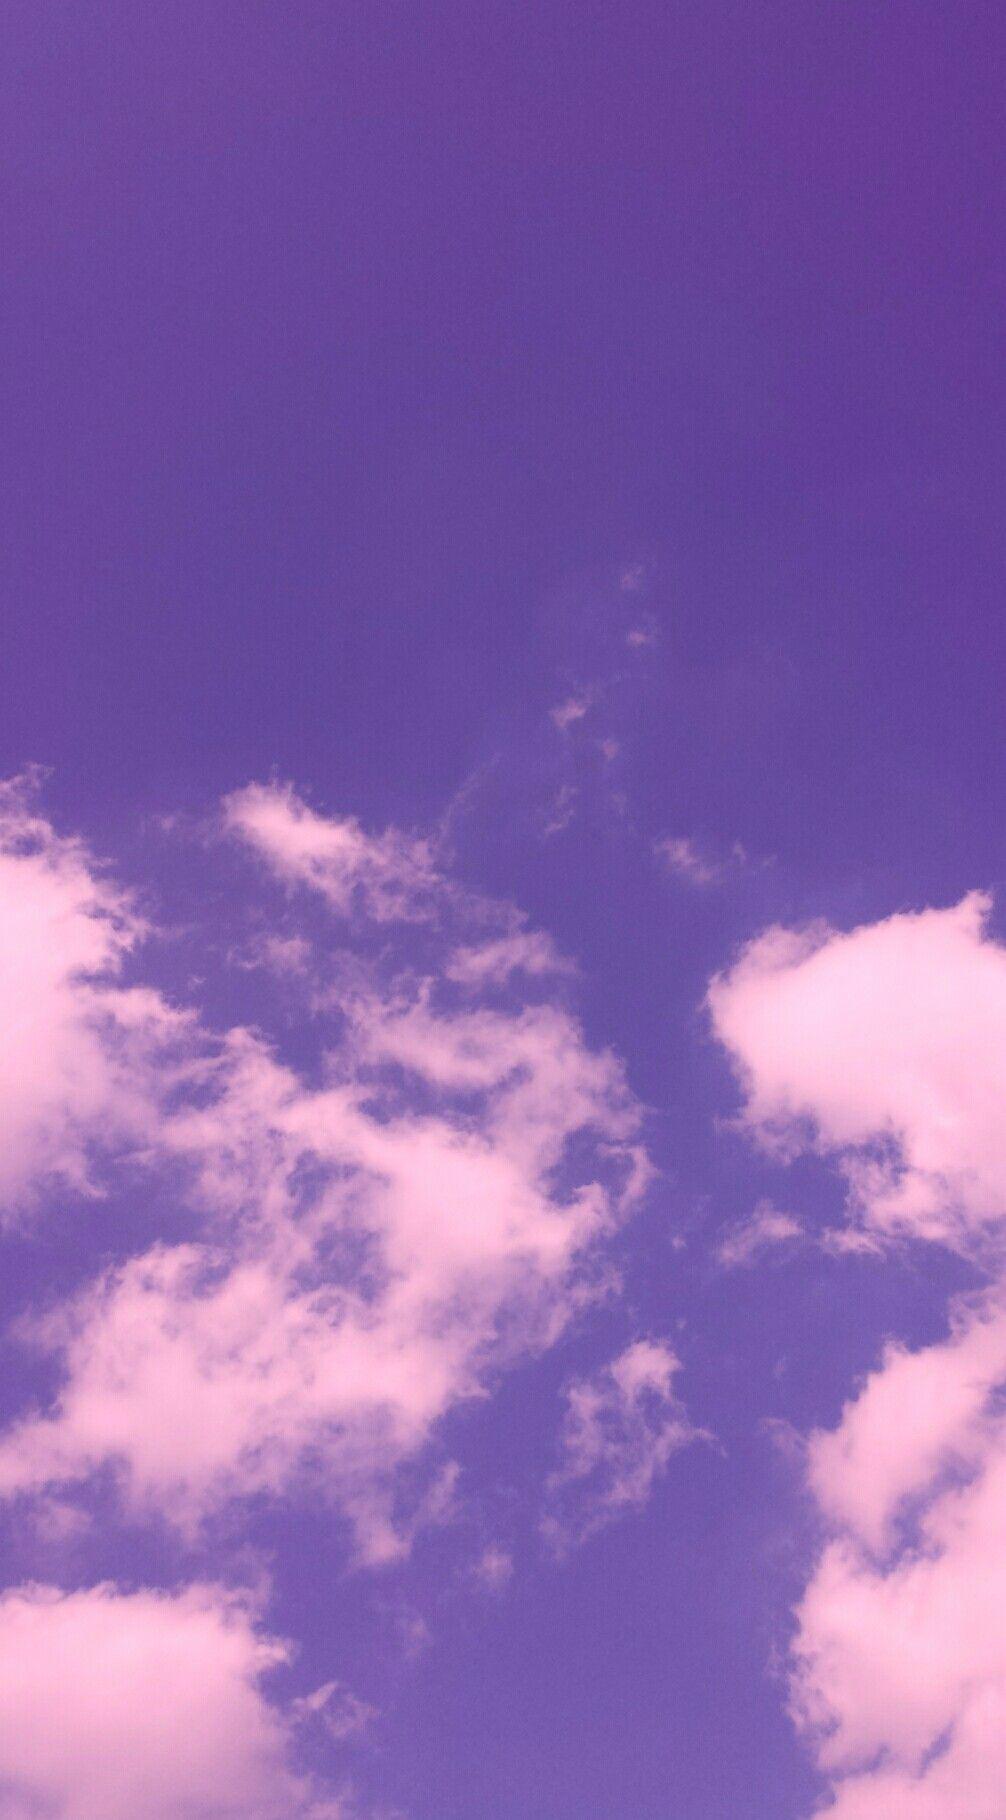 A man is flying his kite in the sky - Pastel purple, grunge, sky, light purple, cloud